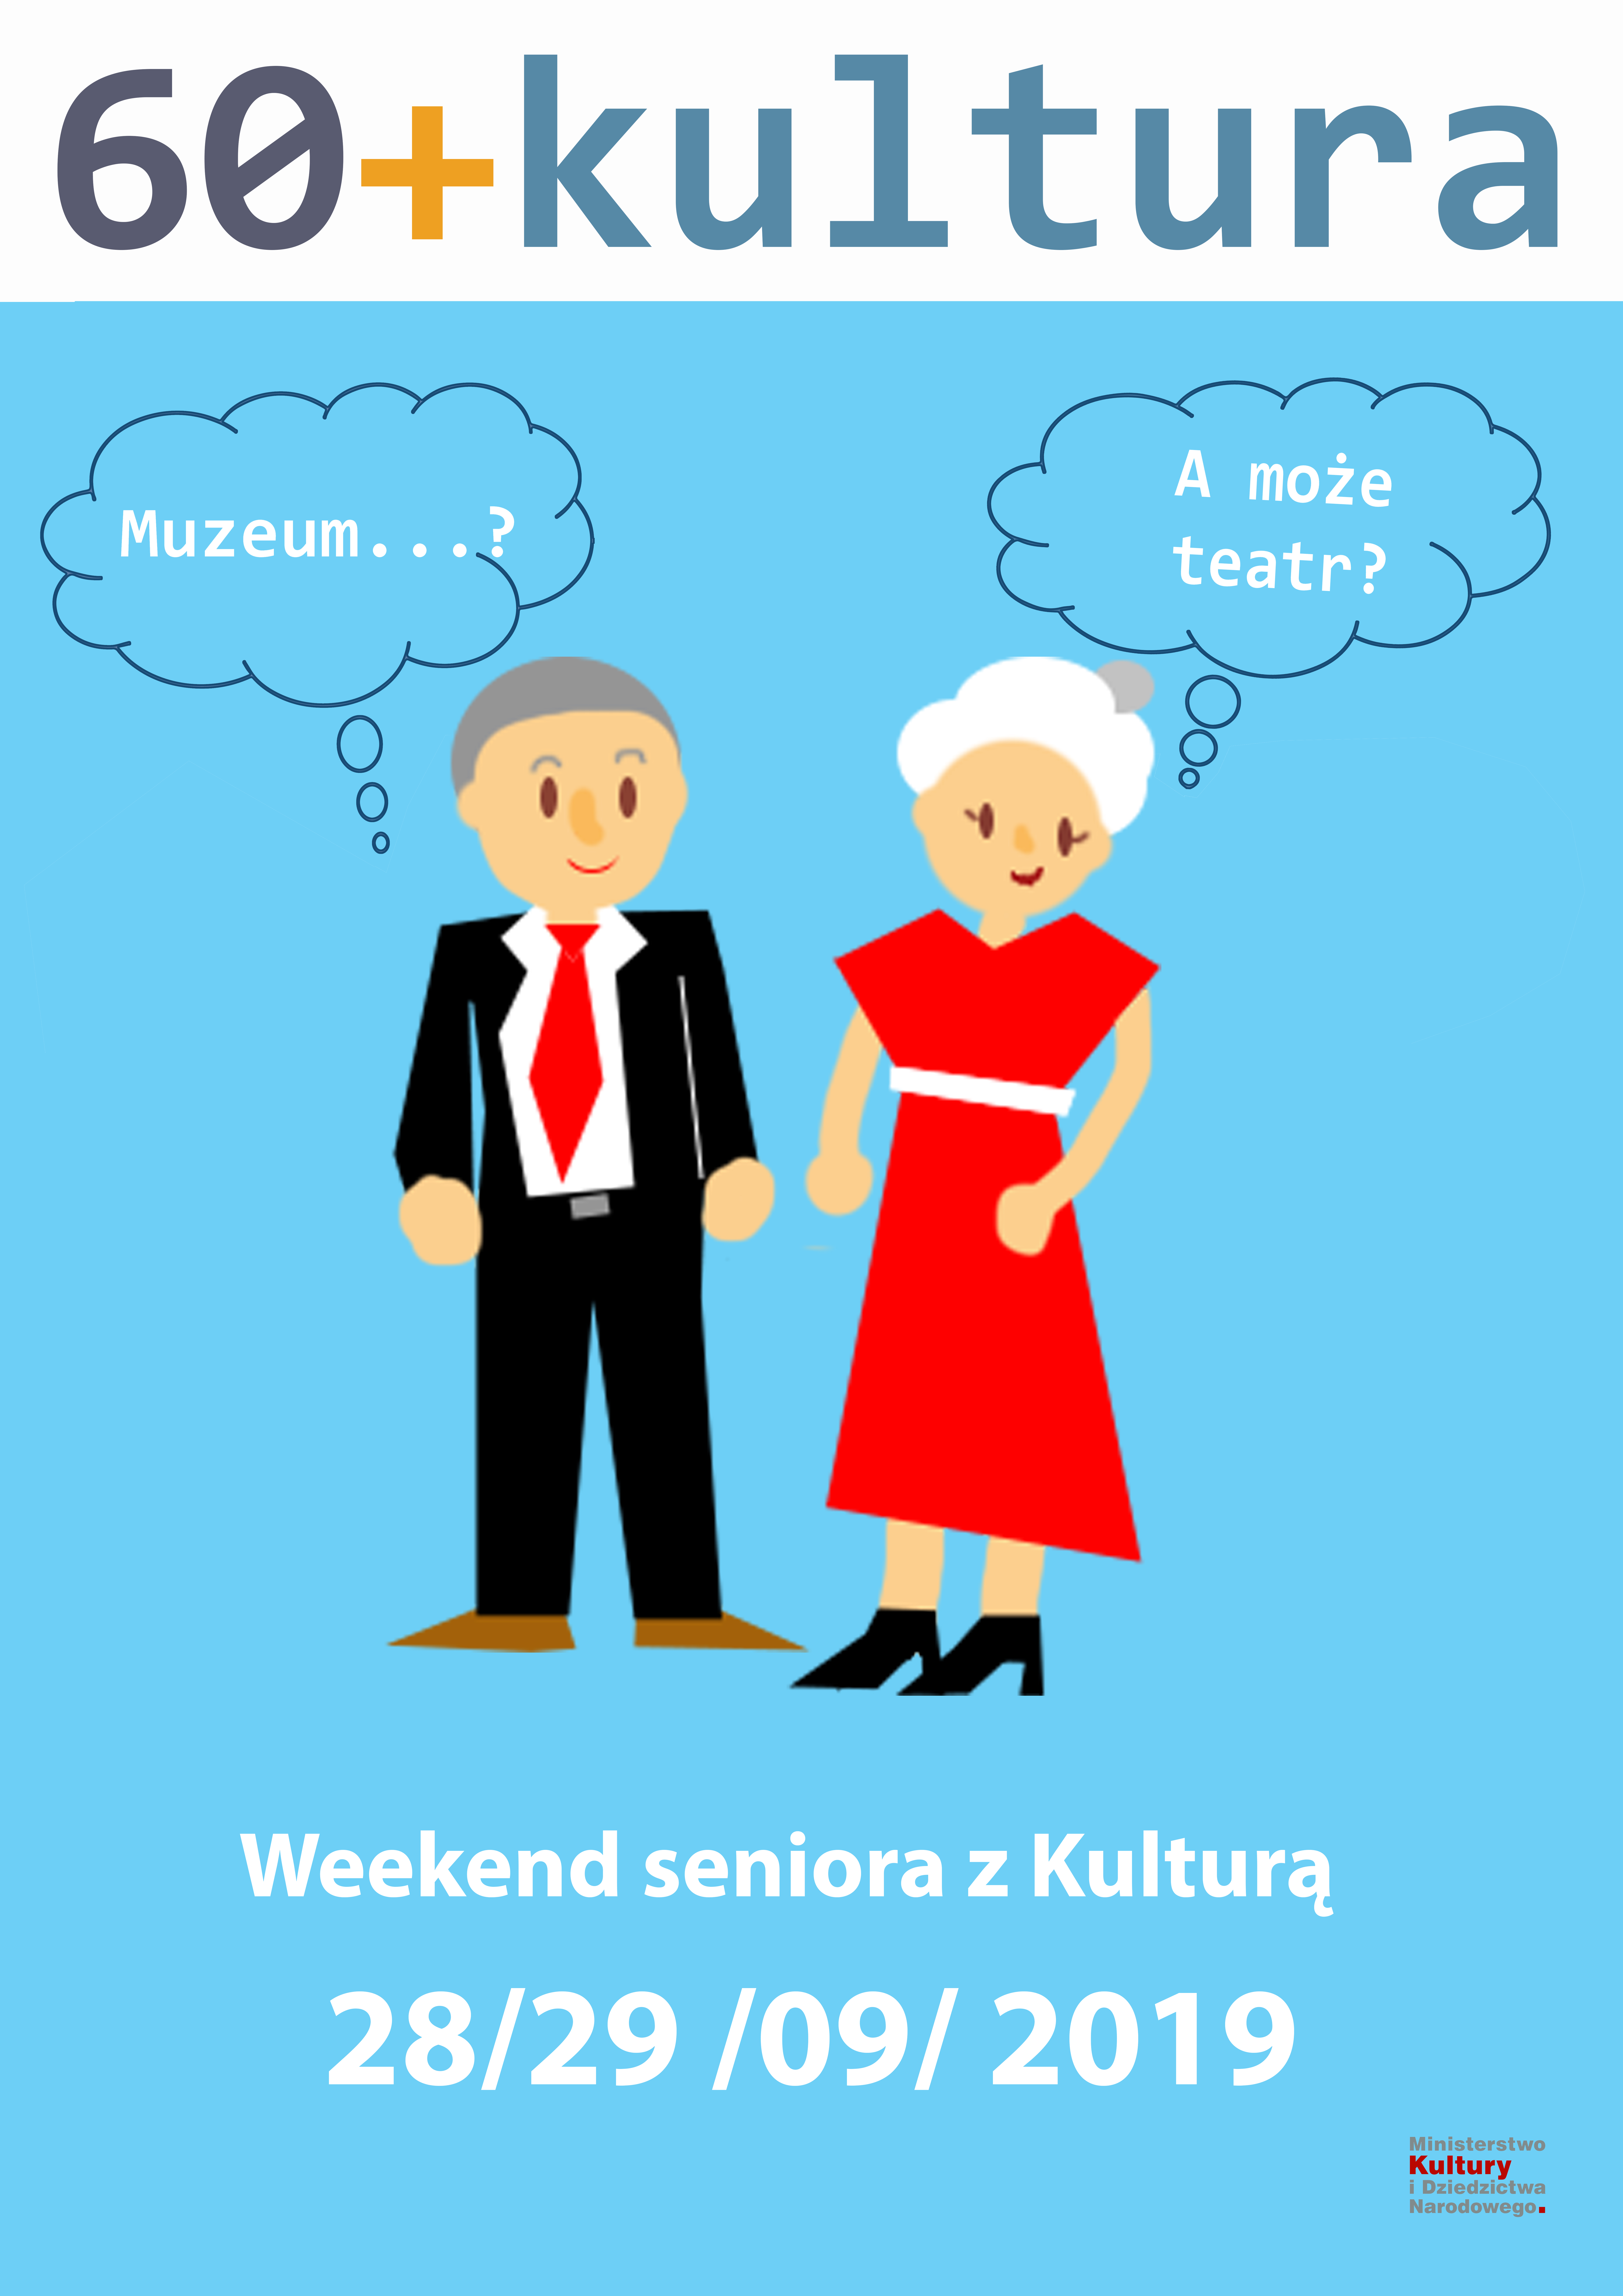 Weekend Seniora z Kulturą